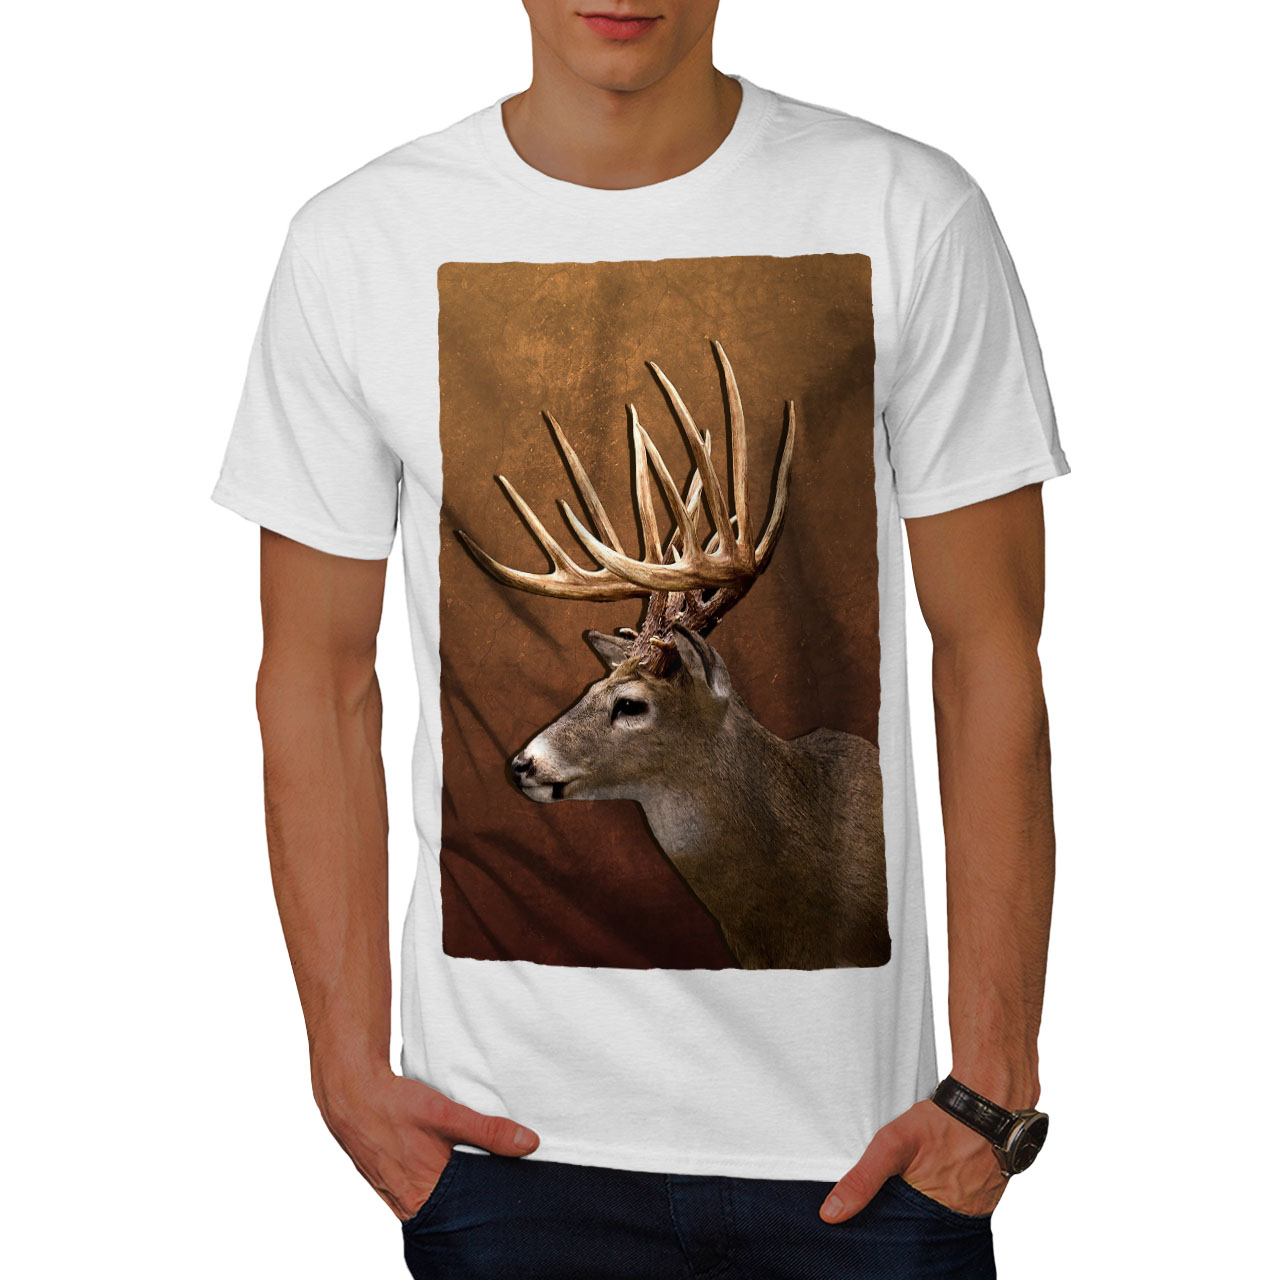 Wellcoda Deer Glasses Wild Animal Mens T-shirt Wild Graphic Design Printed Tee 